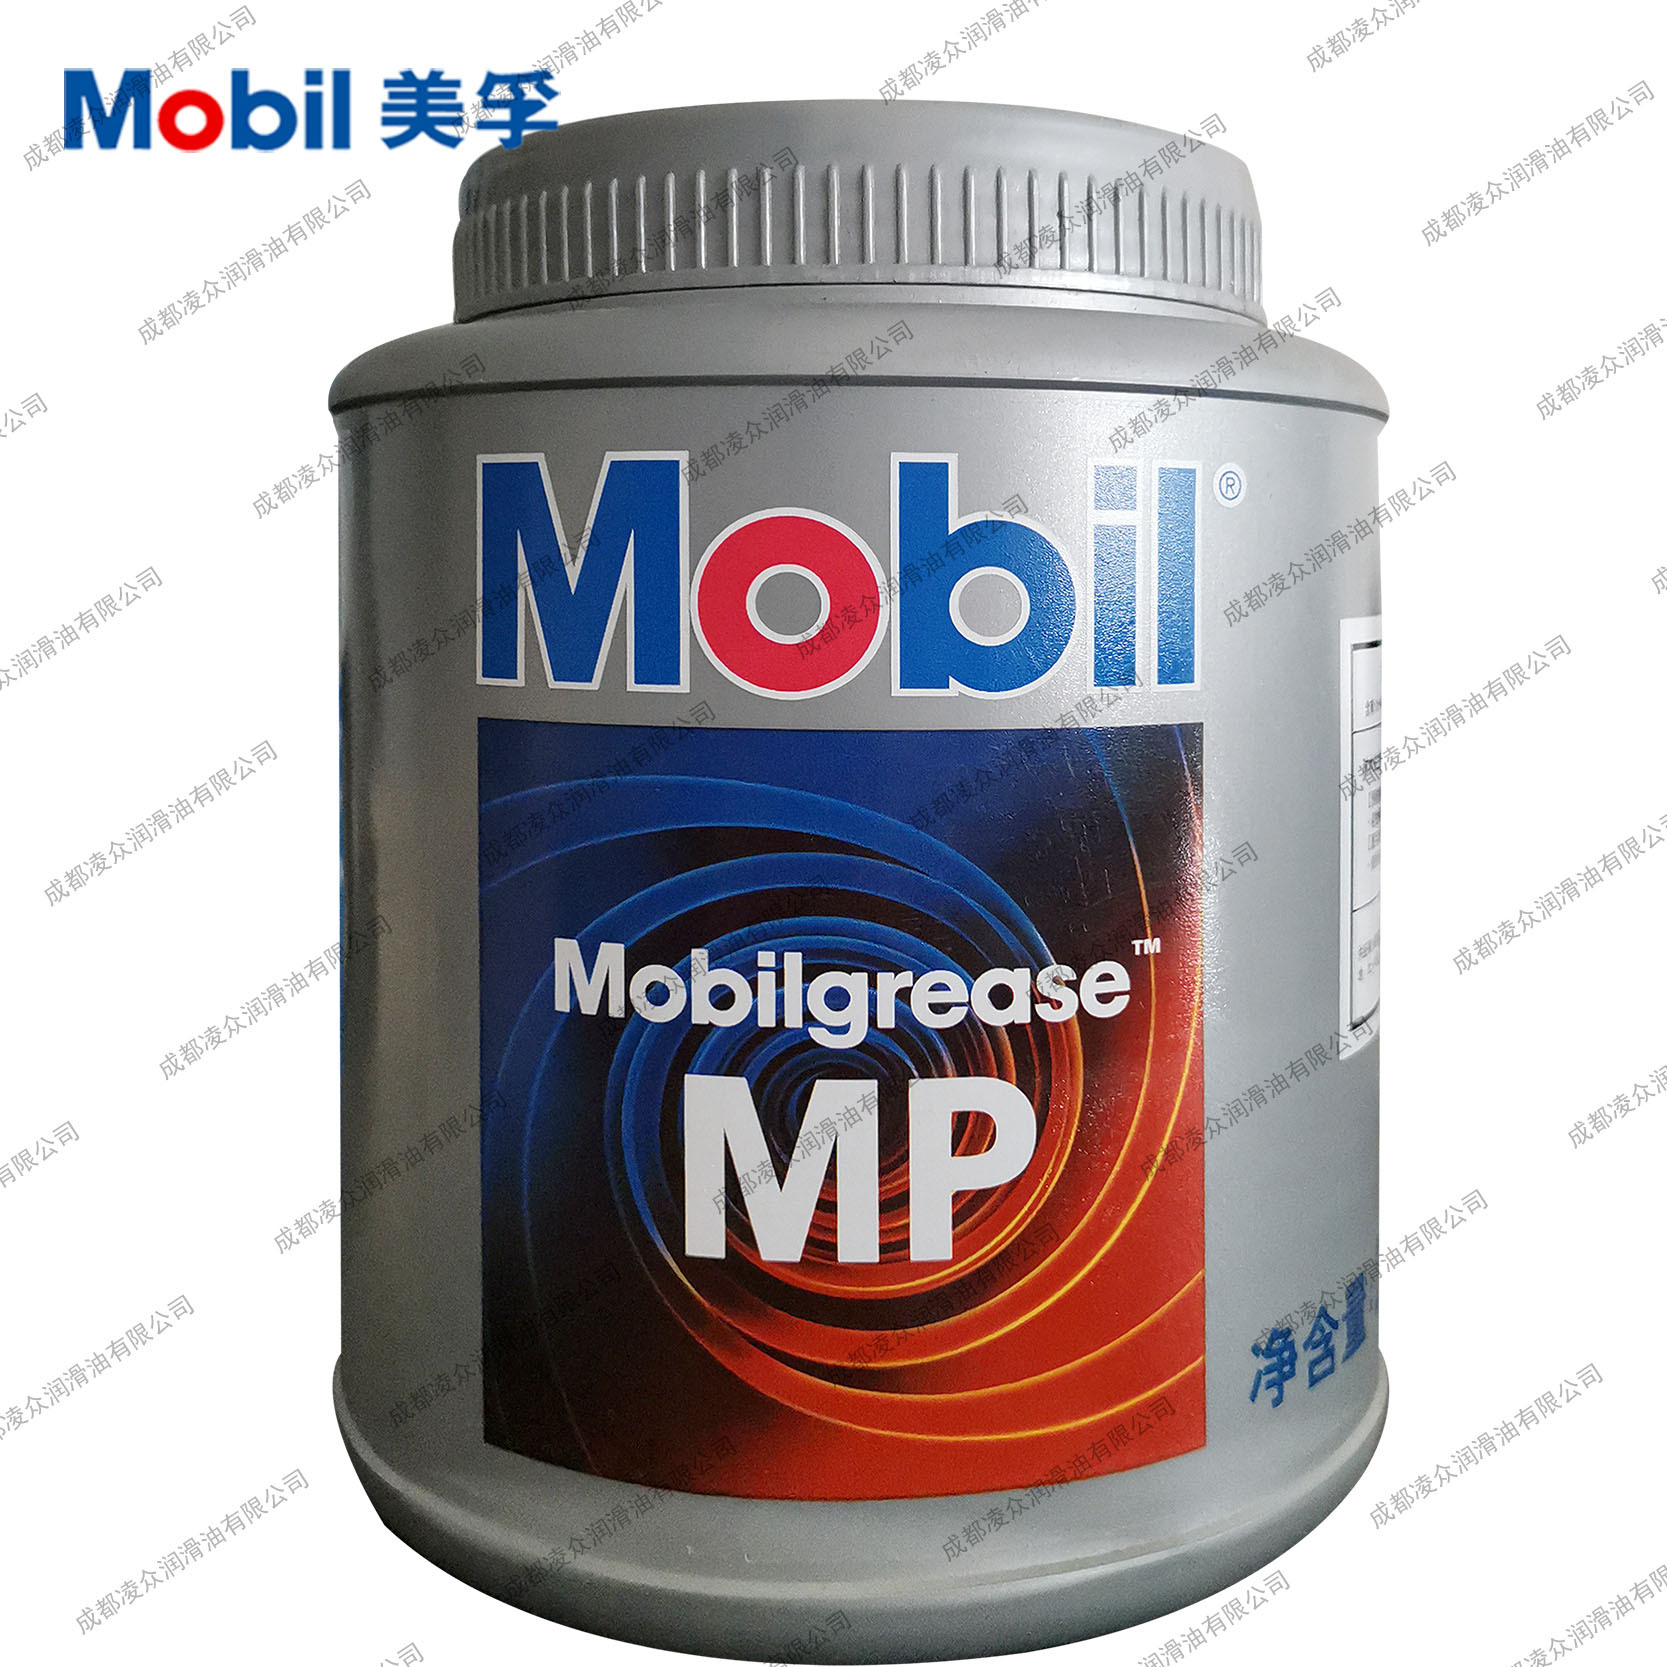 Mobilgrease 美孚MP 2号抗水耐磨轴承润滑脂 中棕色 耐高温黄油